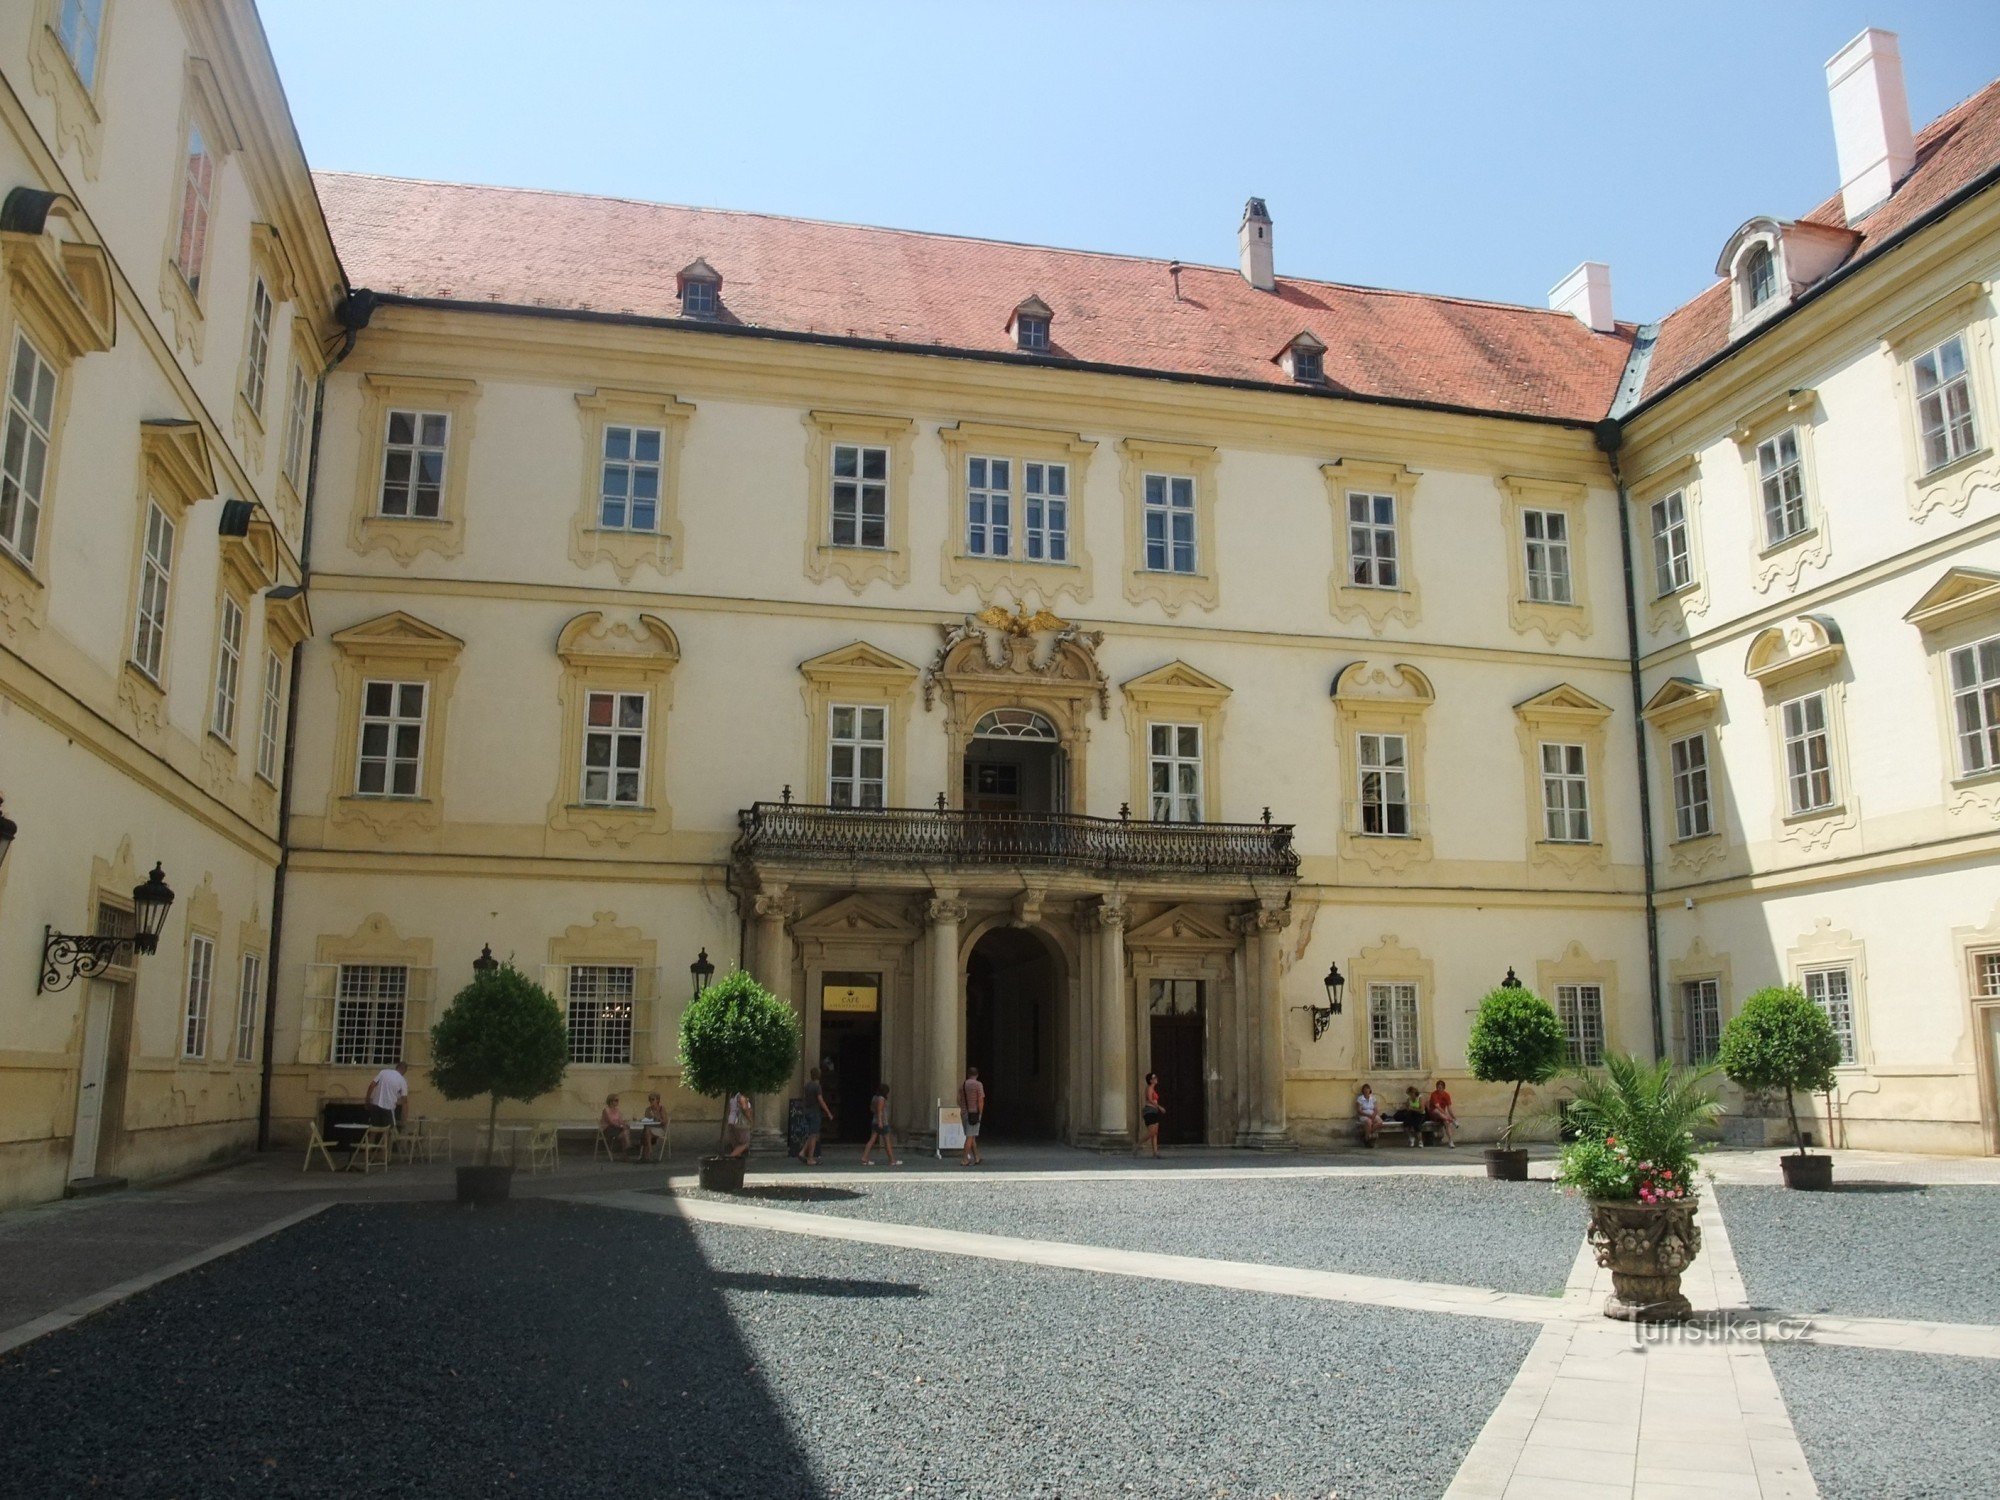 Valtice Castle - tidligere statelige residens for Liechtensteinerne